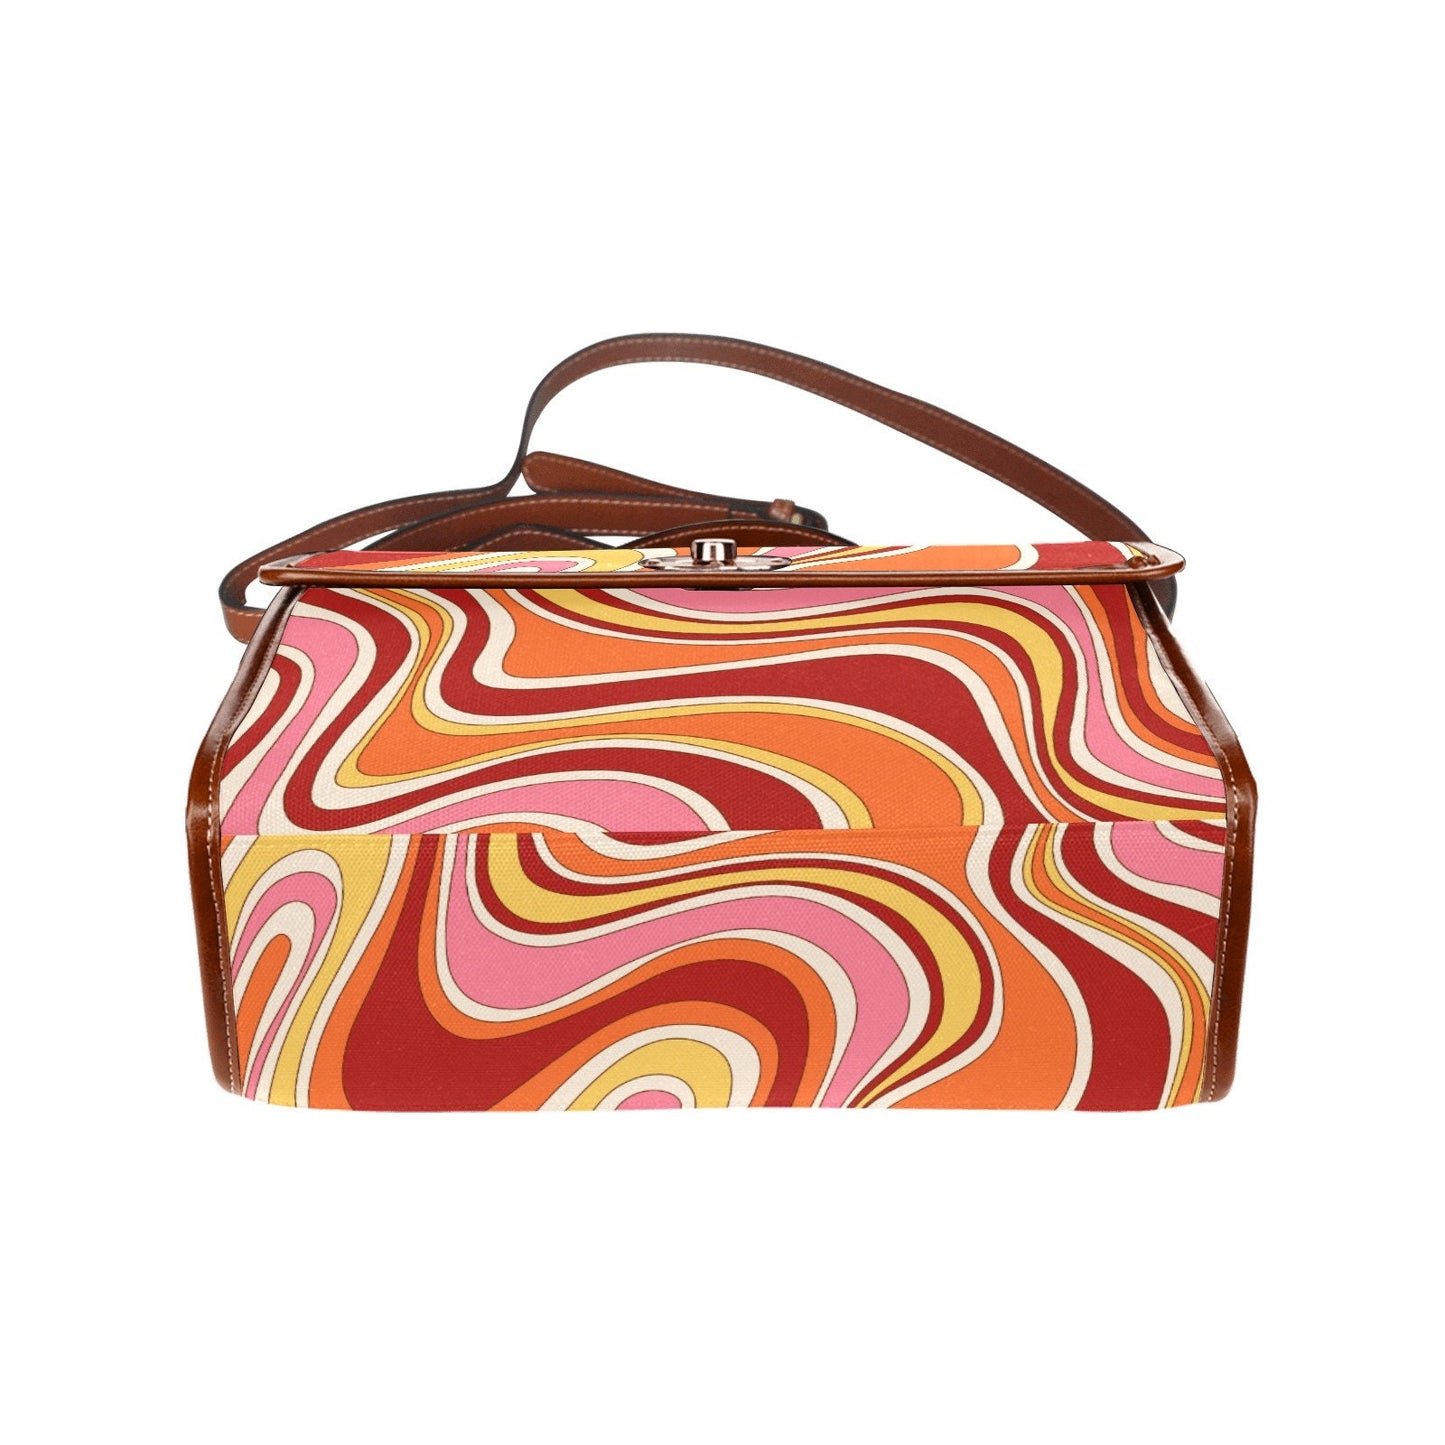 Vintage style handbag, Retro Handbag, Women's Purse, Hippie bag, 70s Style purse, Red Stripe Handbag,70s handbag, 70s inspired, Women's Bag